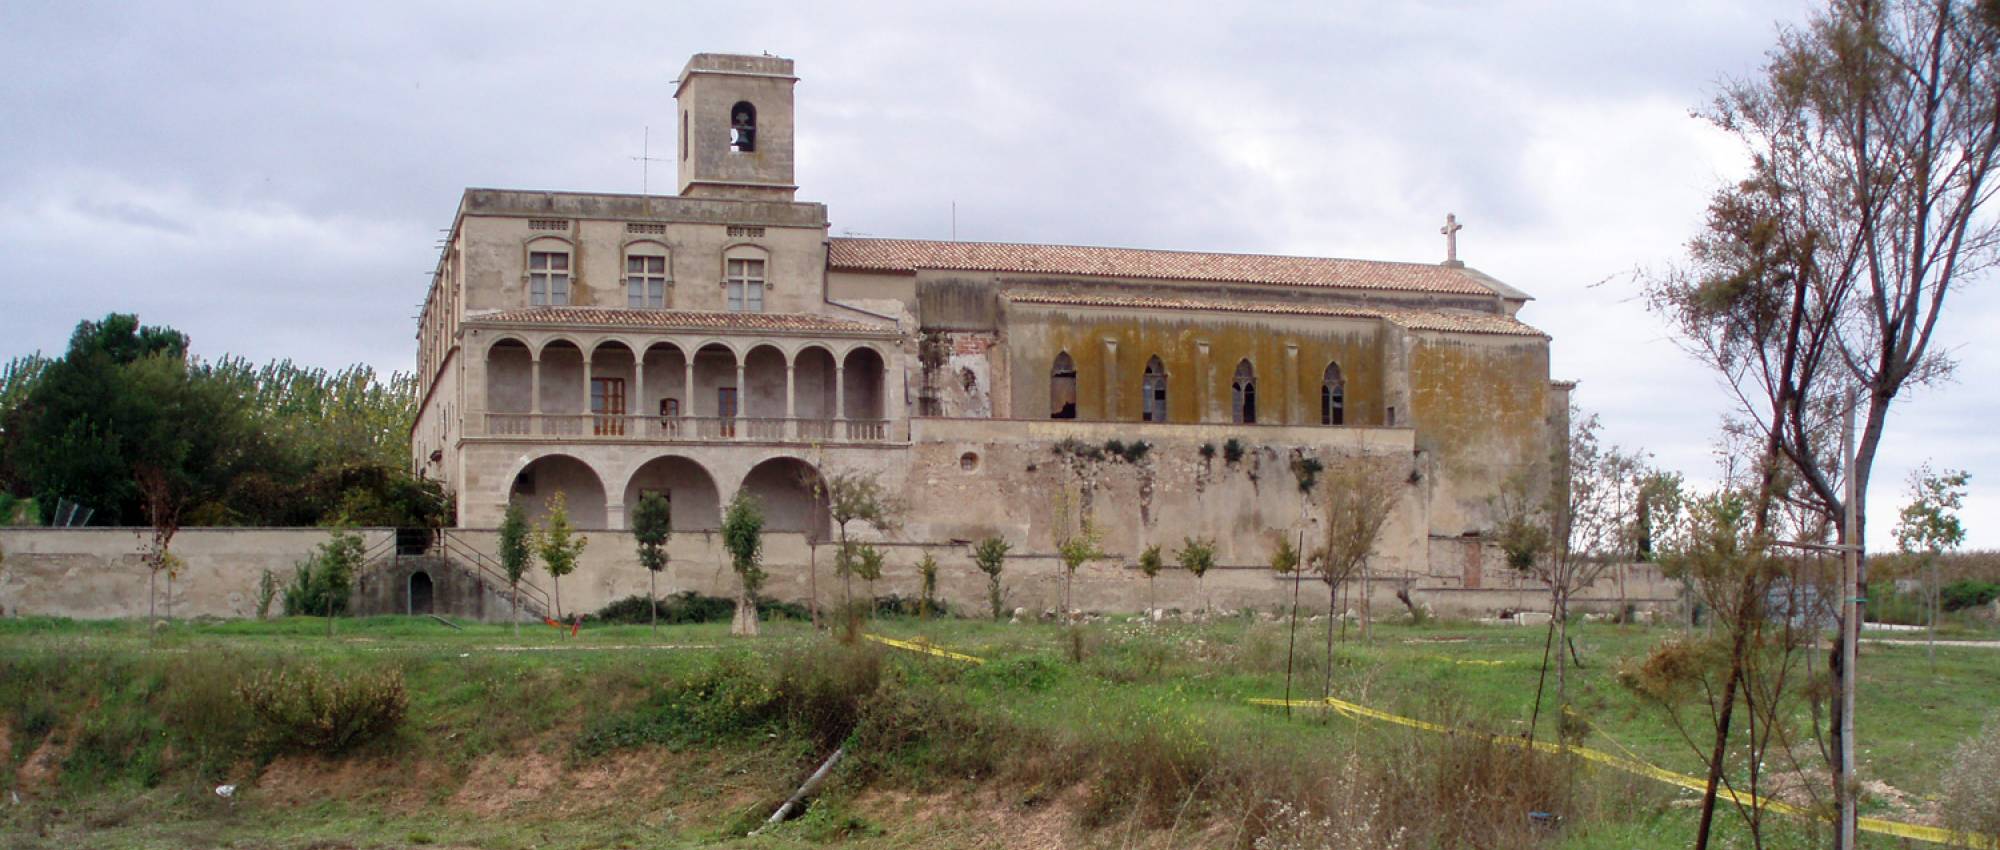 Vista general del convento de Sant Bartomeu. J.Gomà / Wikimedia Commons. CC BY 3.0